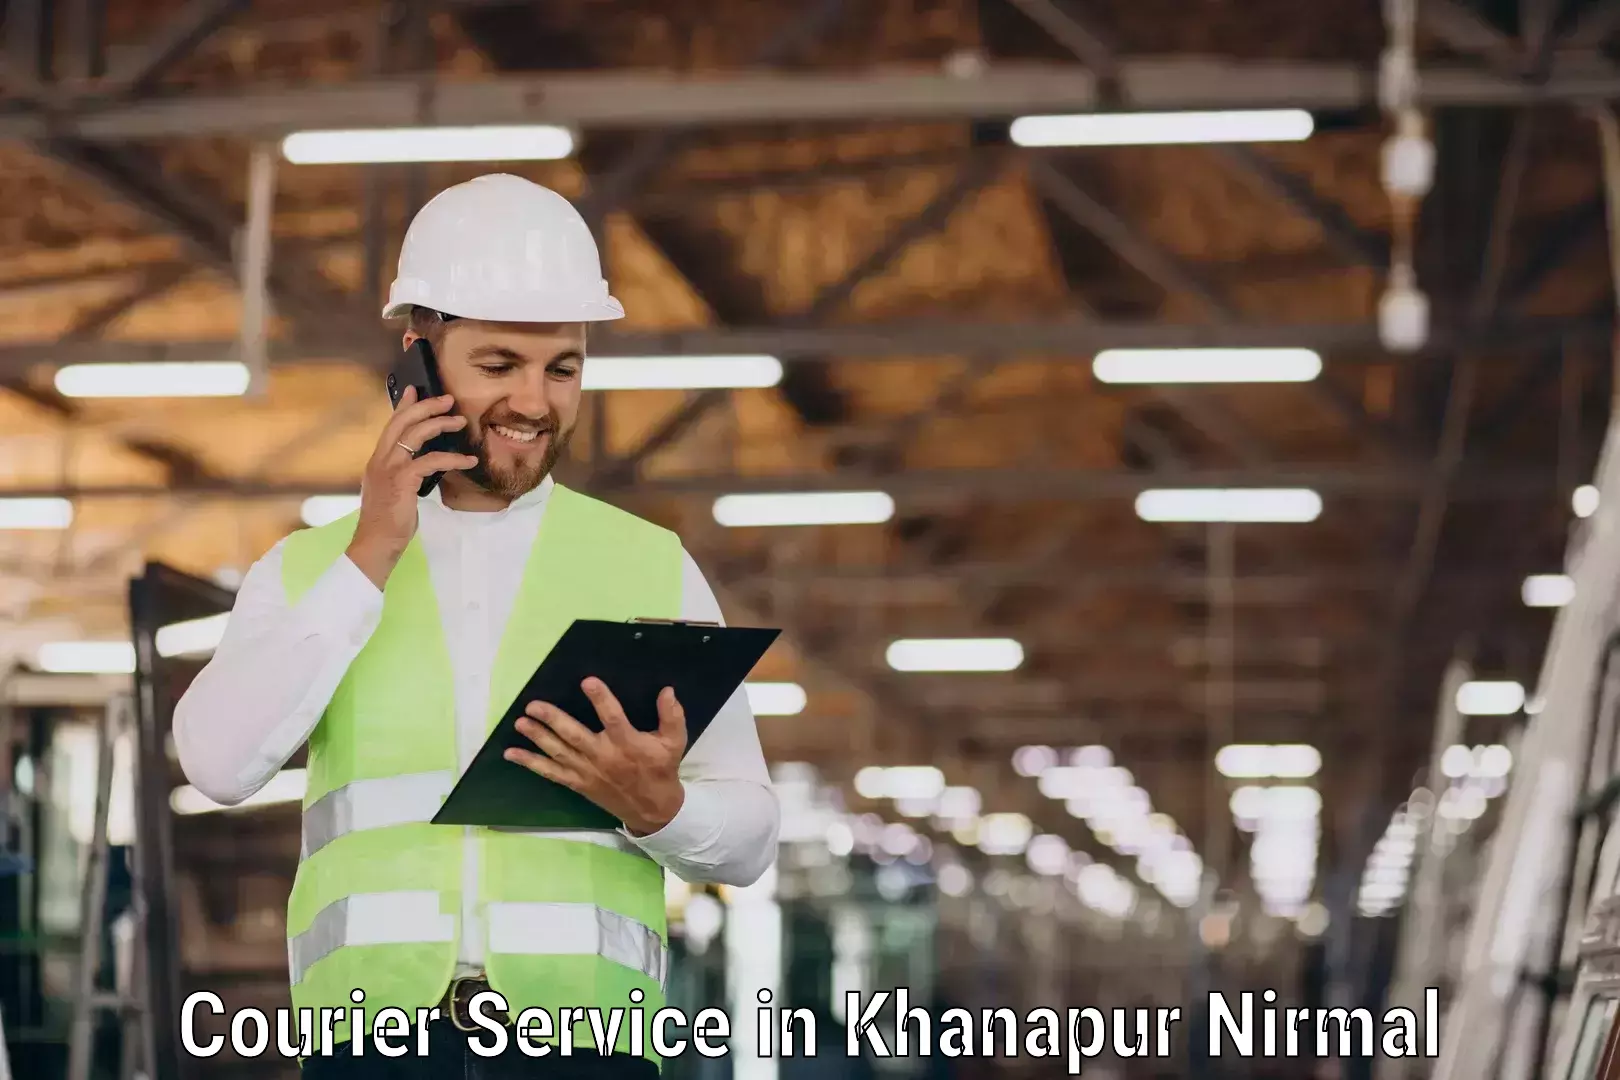 On-demand courier in Khanapur Nirmal